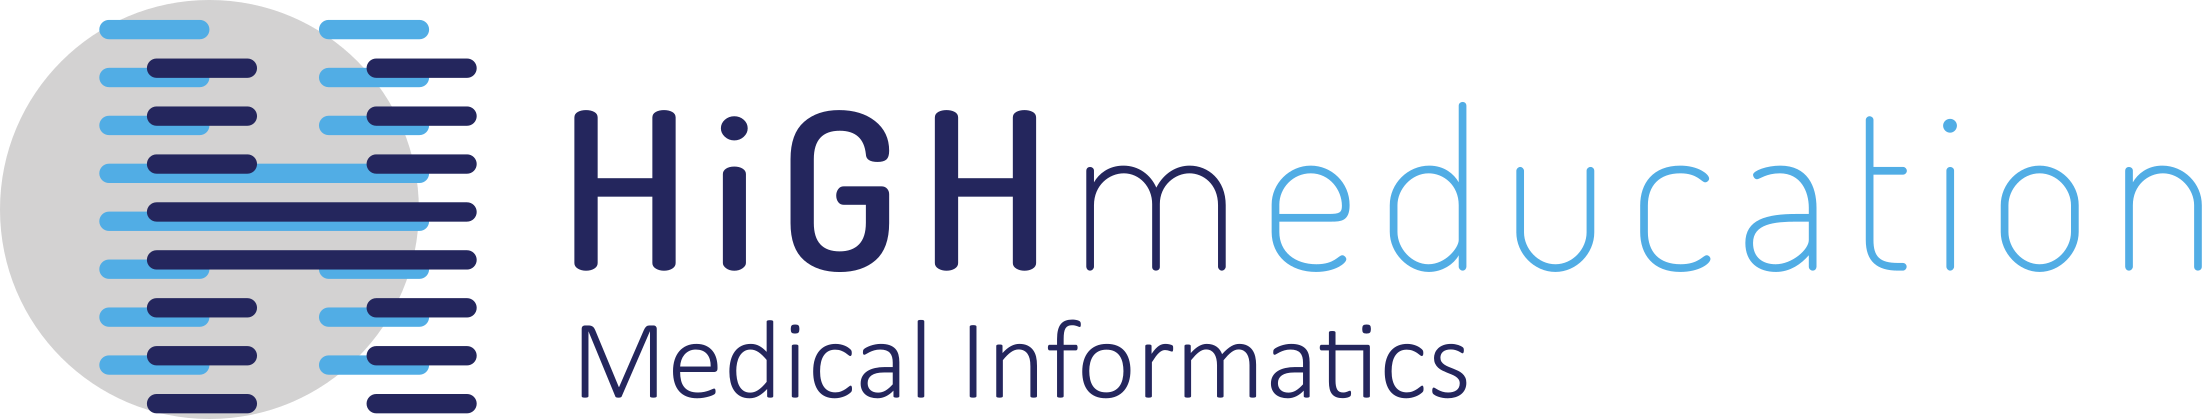 HiGHmeducation_logo (1)